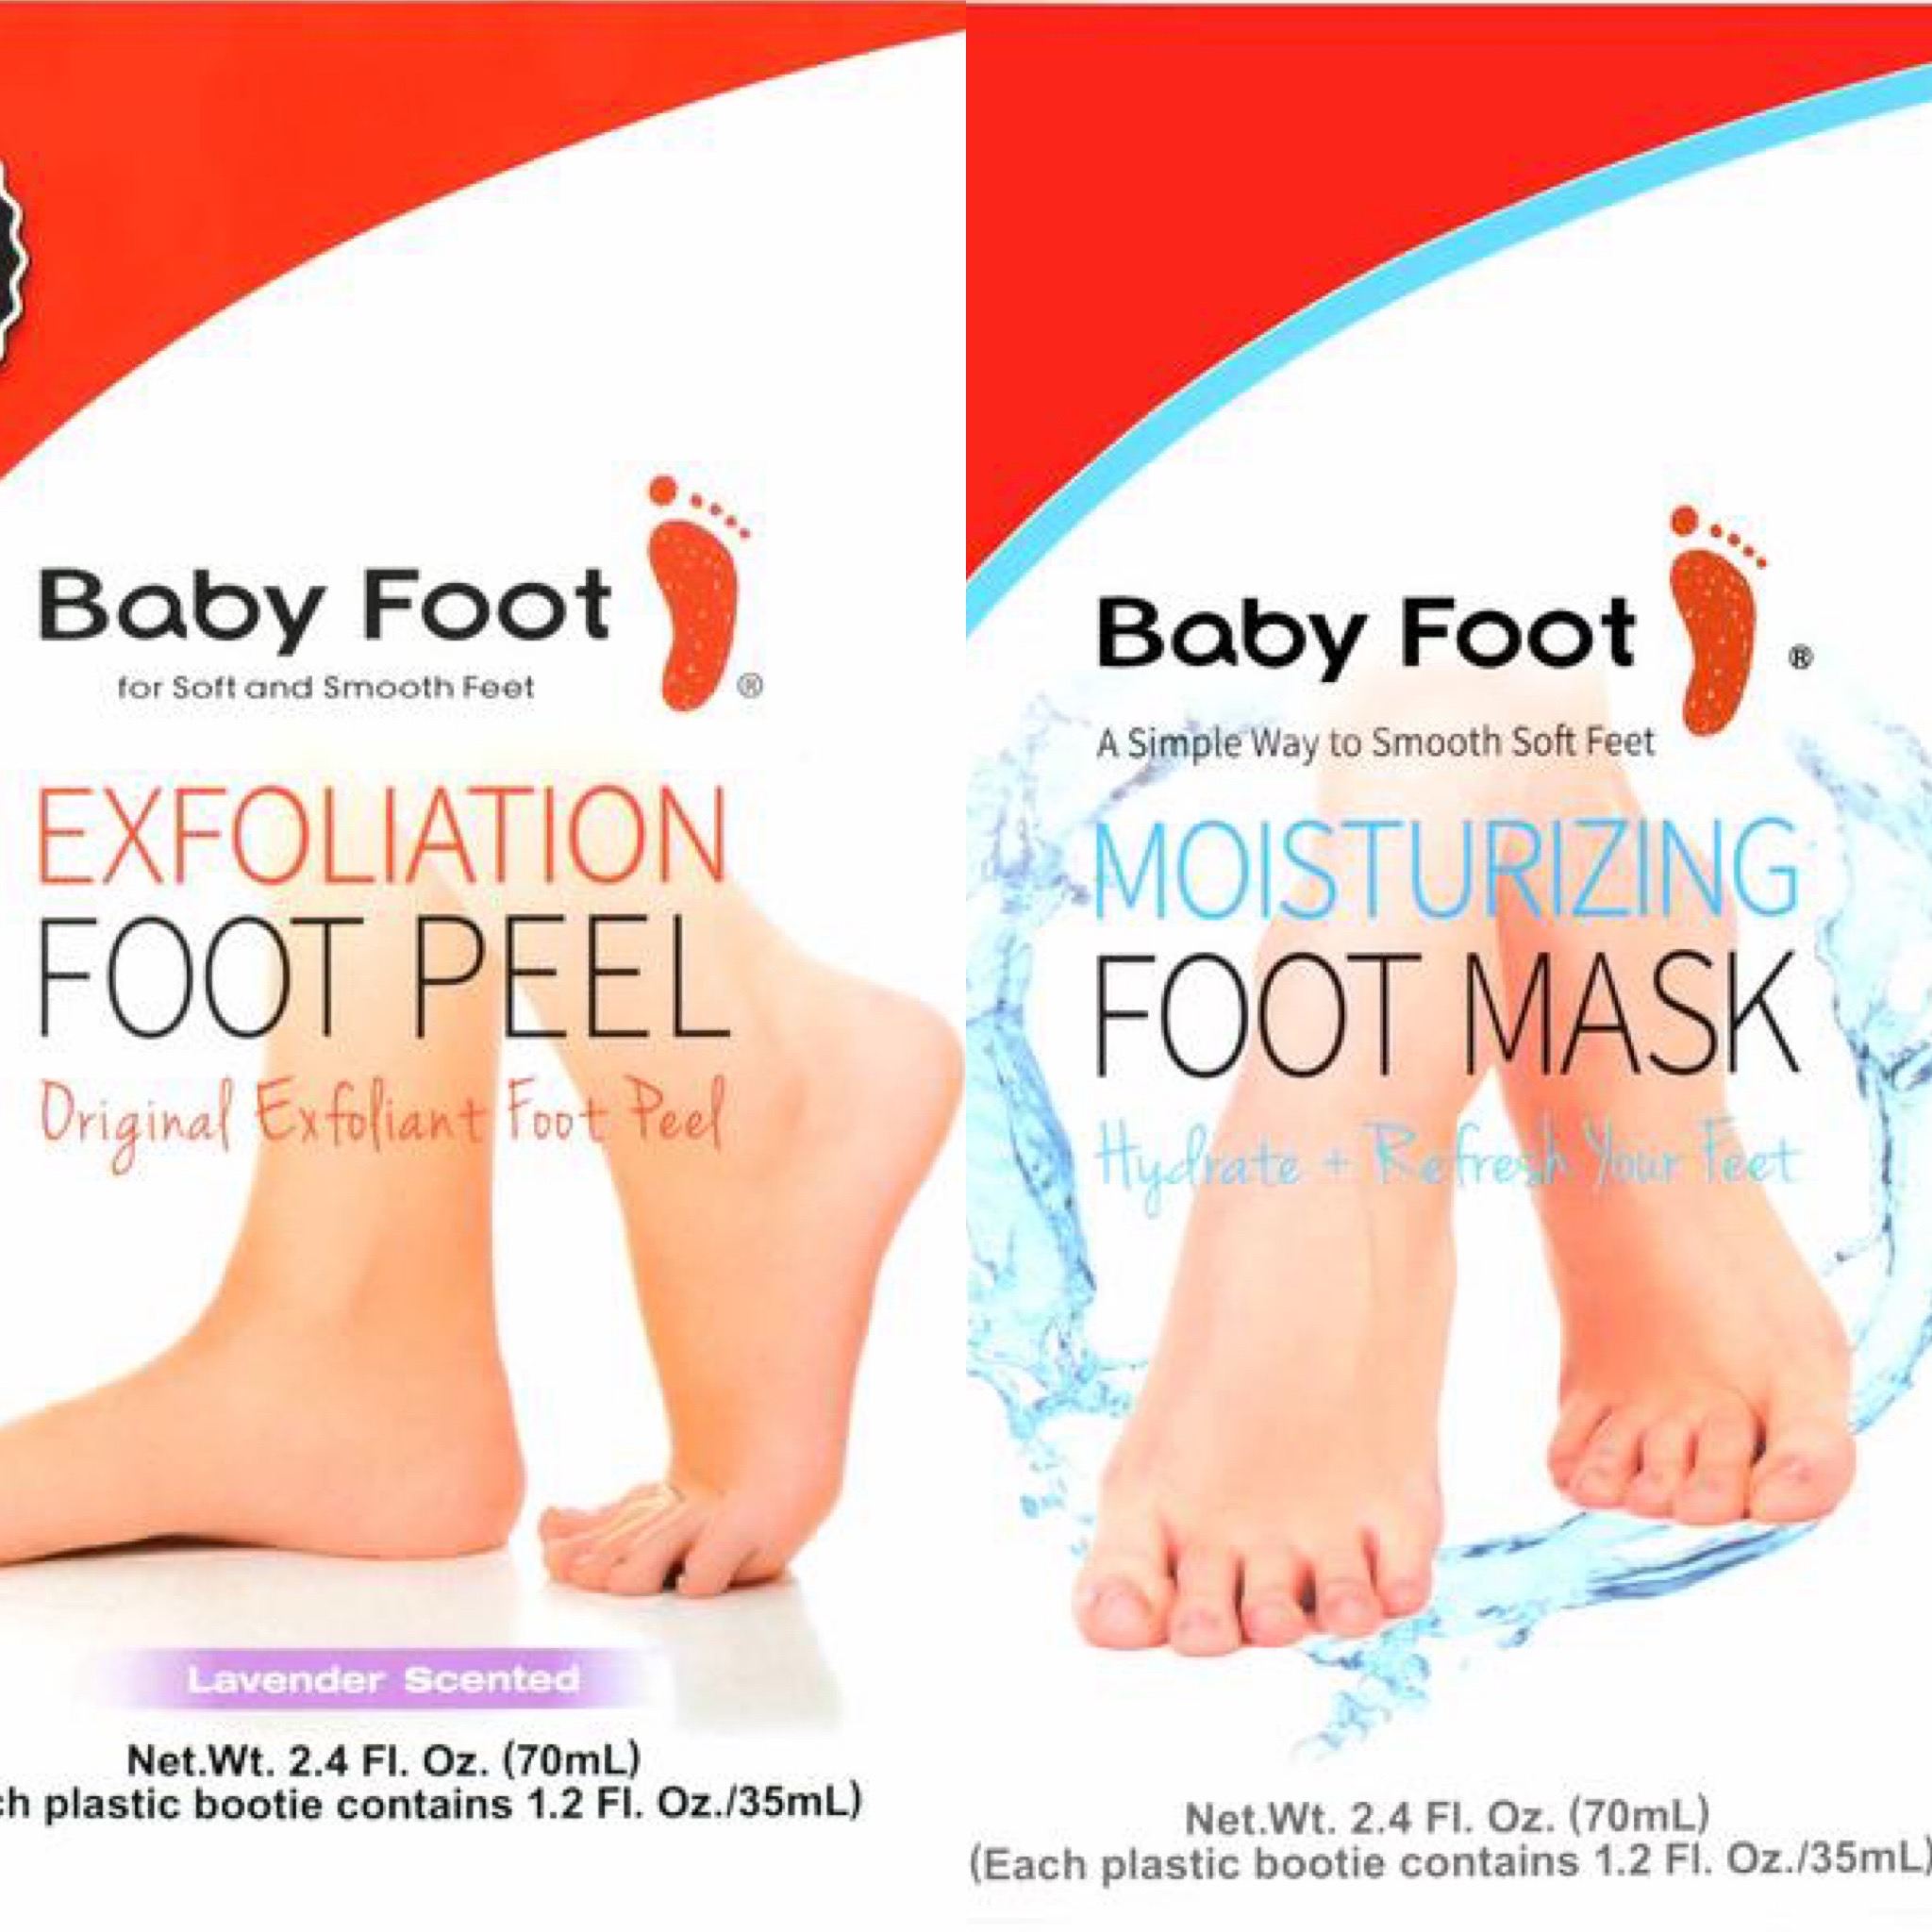 Baby Foot - Moisturizing Foot Mask